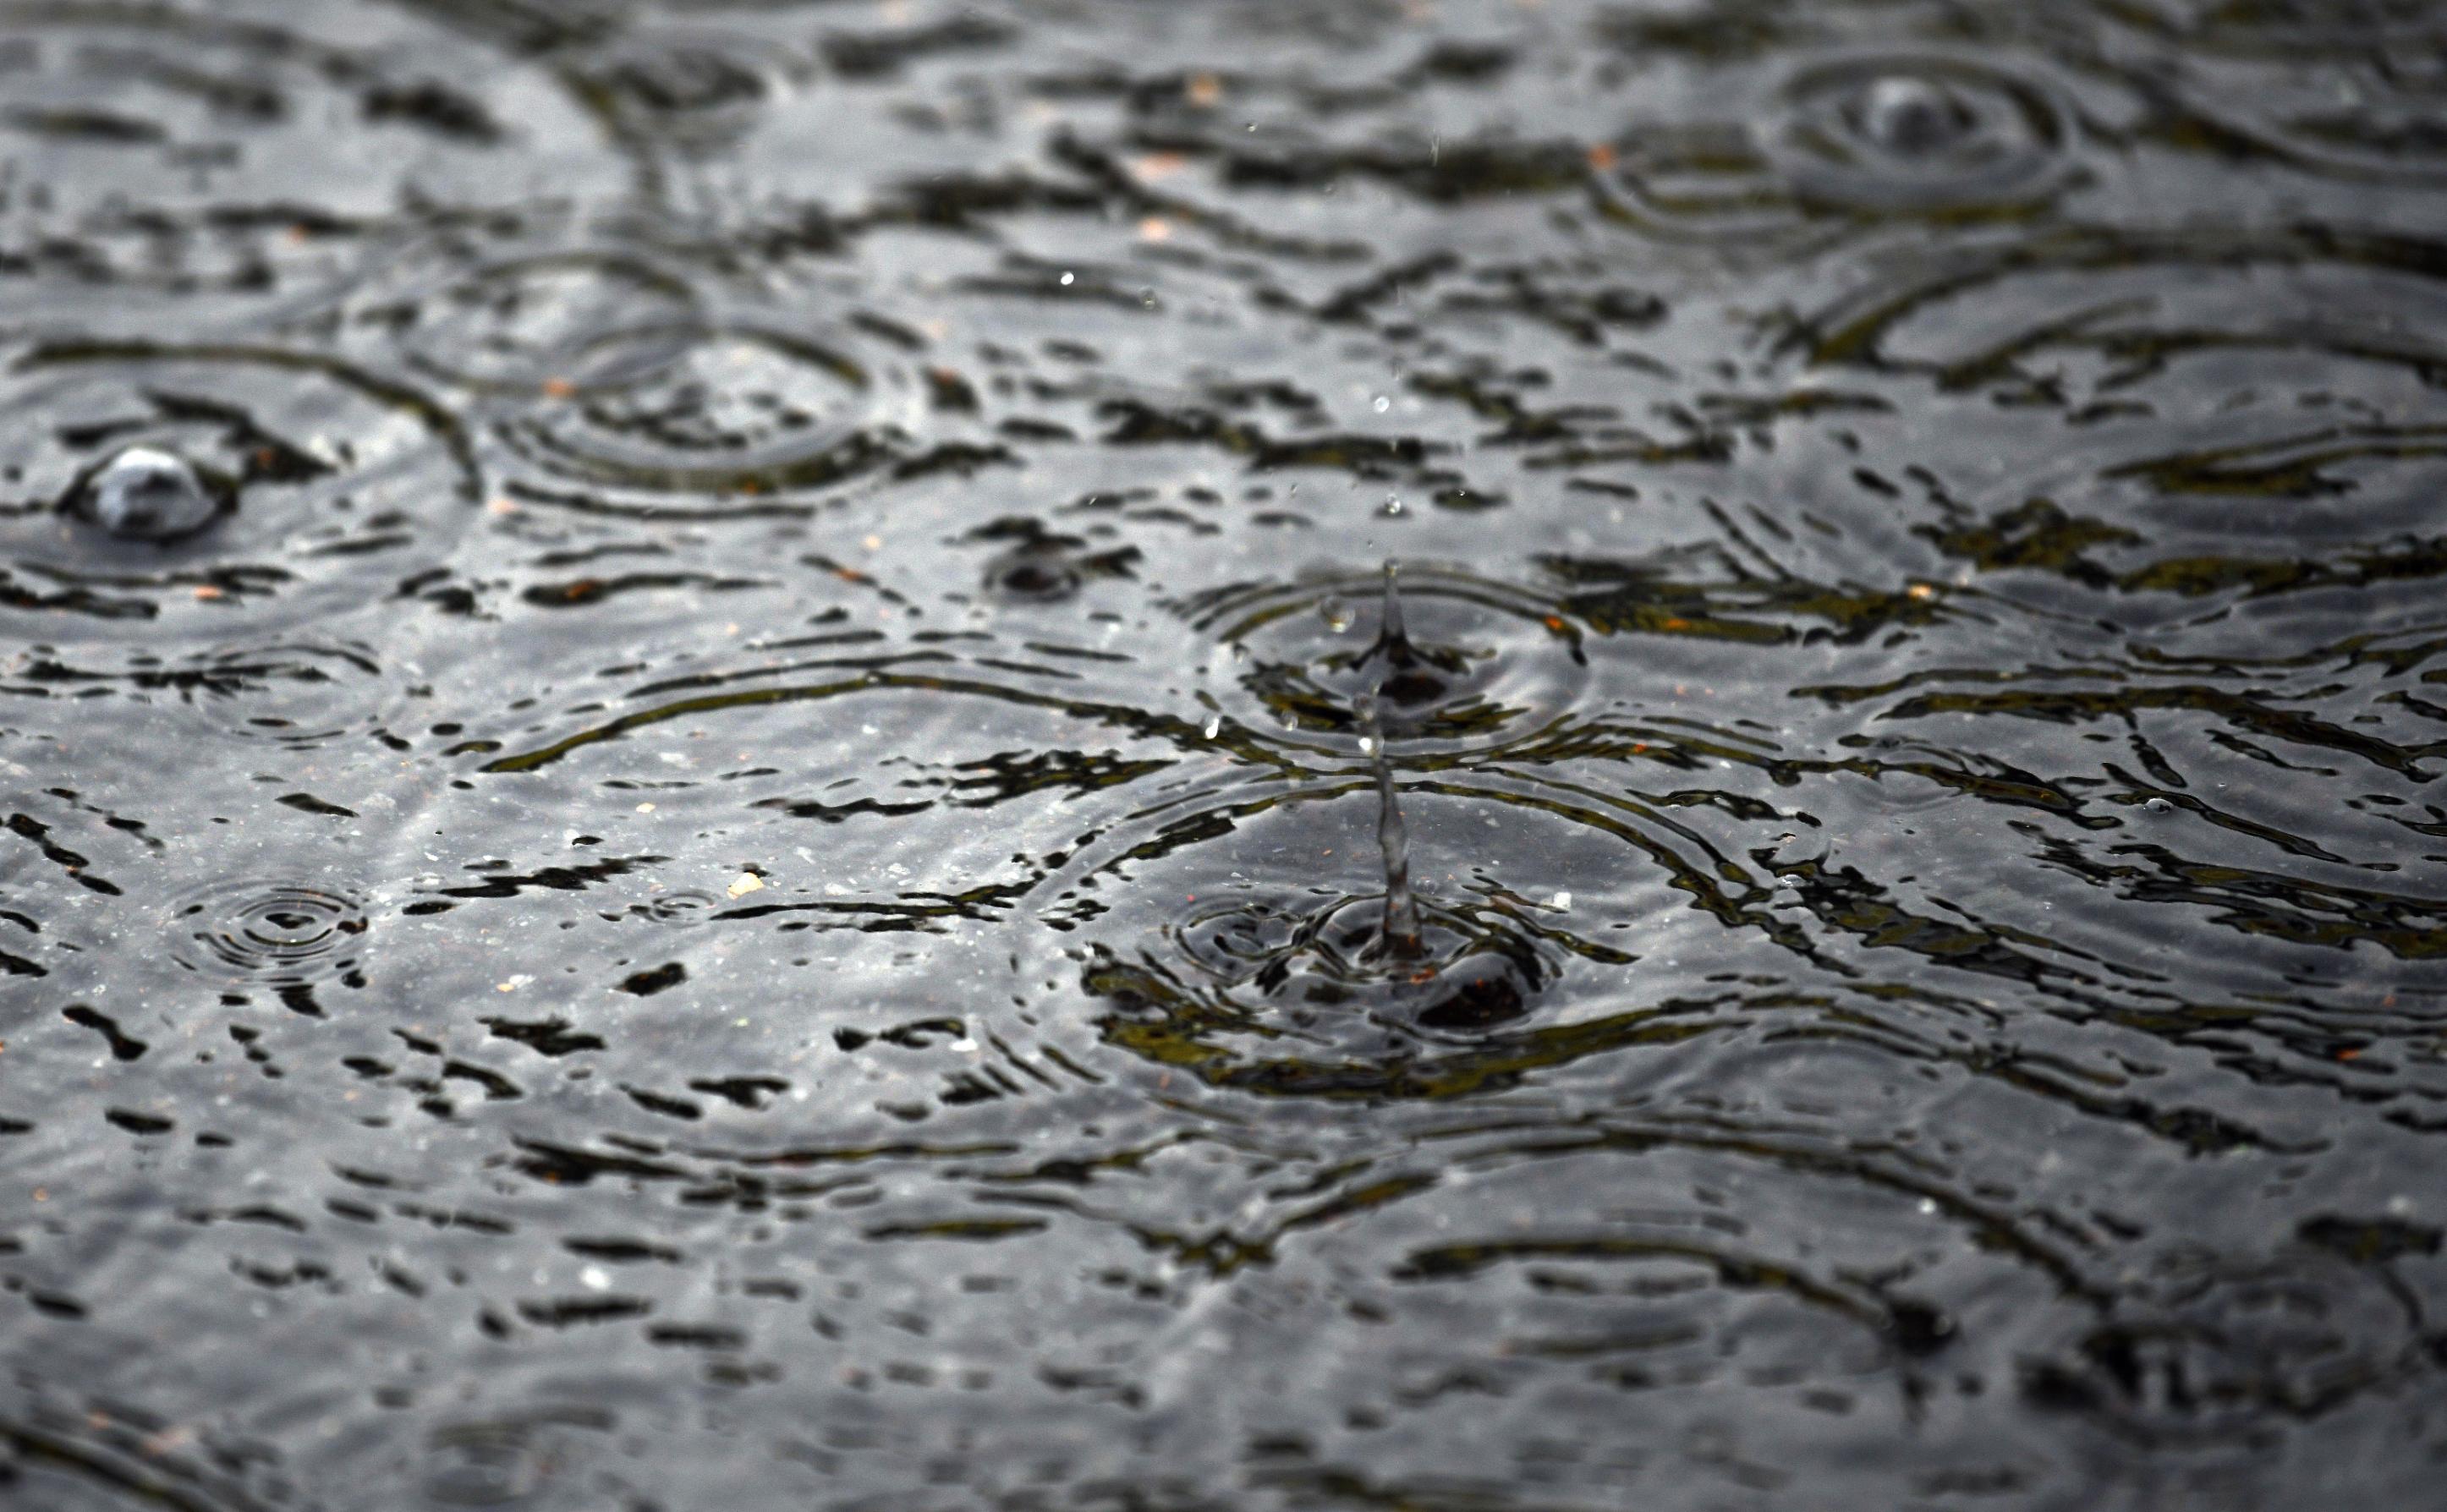 It is raining plastic': Scientists find colorful microplastic in rain | CNN